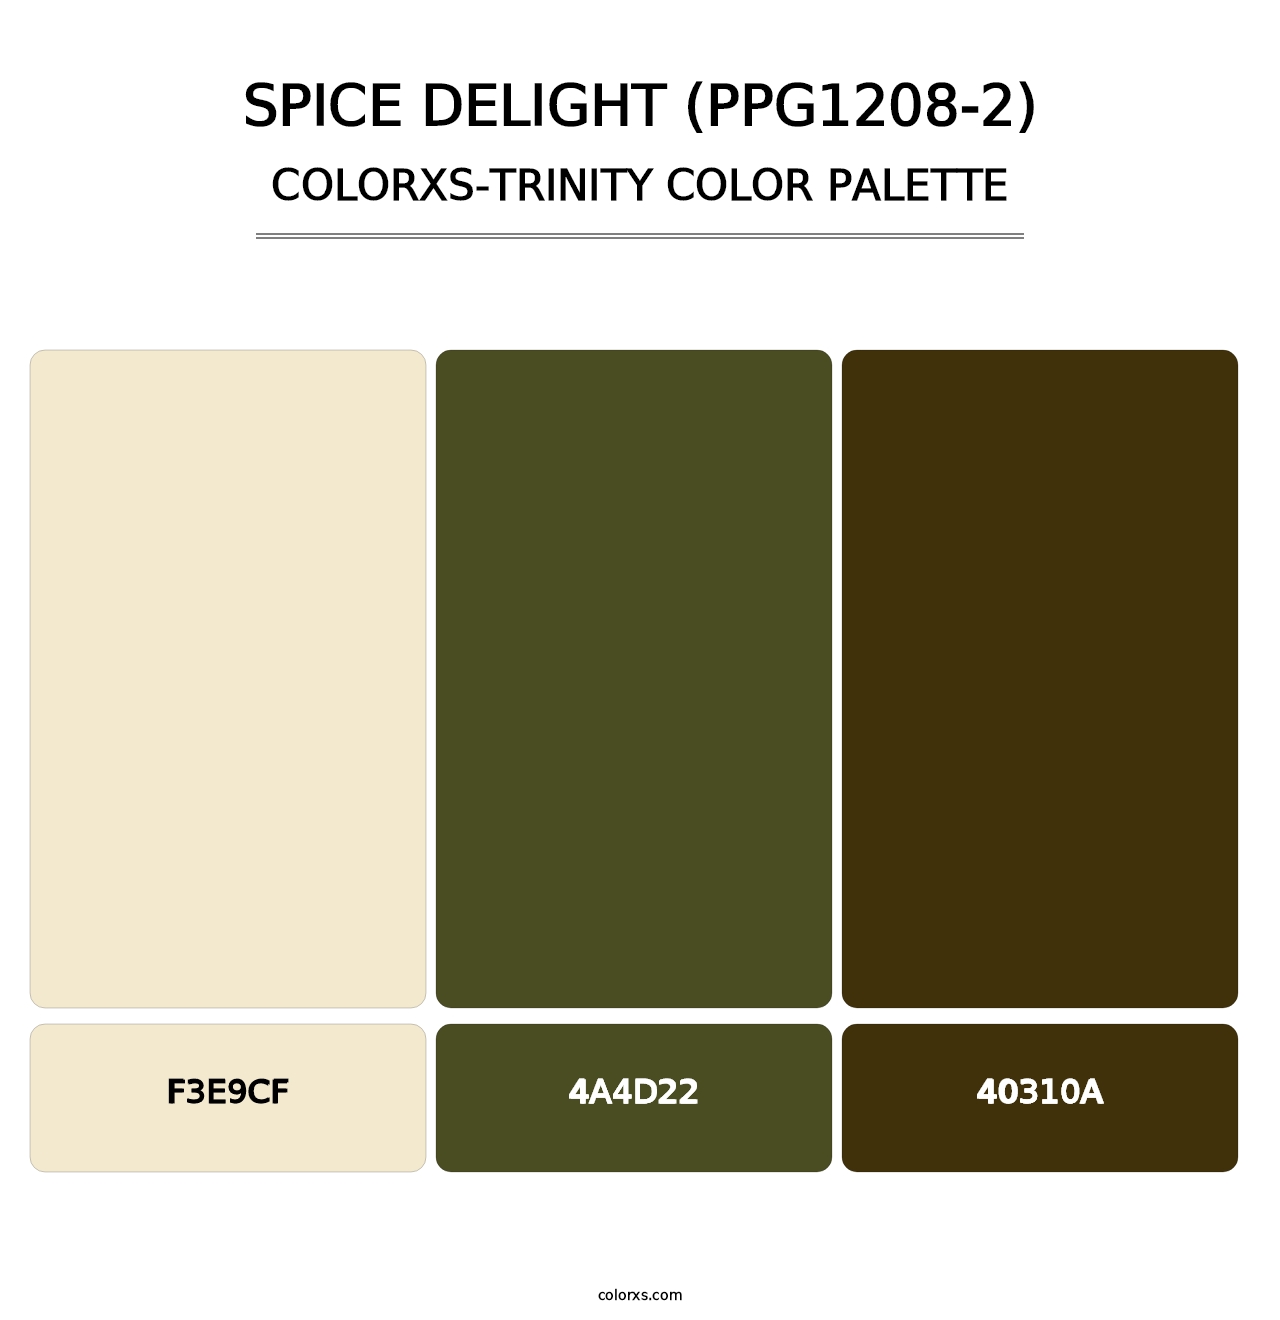 Spice Delight (PPG1208-2) - Colorxs Trinity Palette